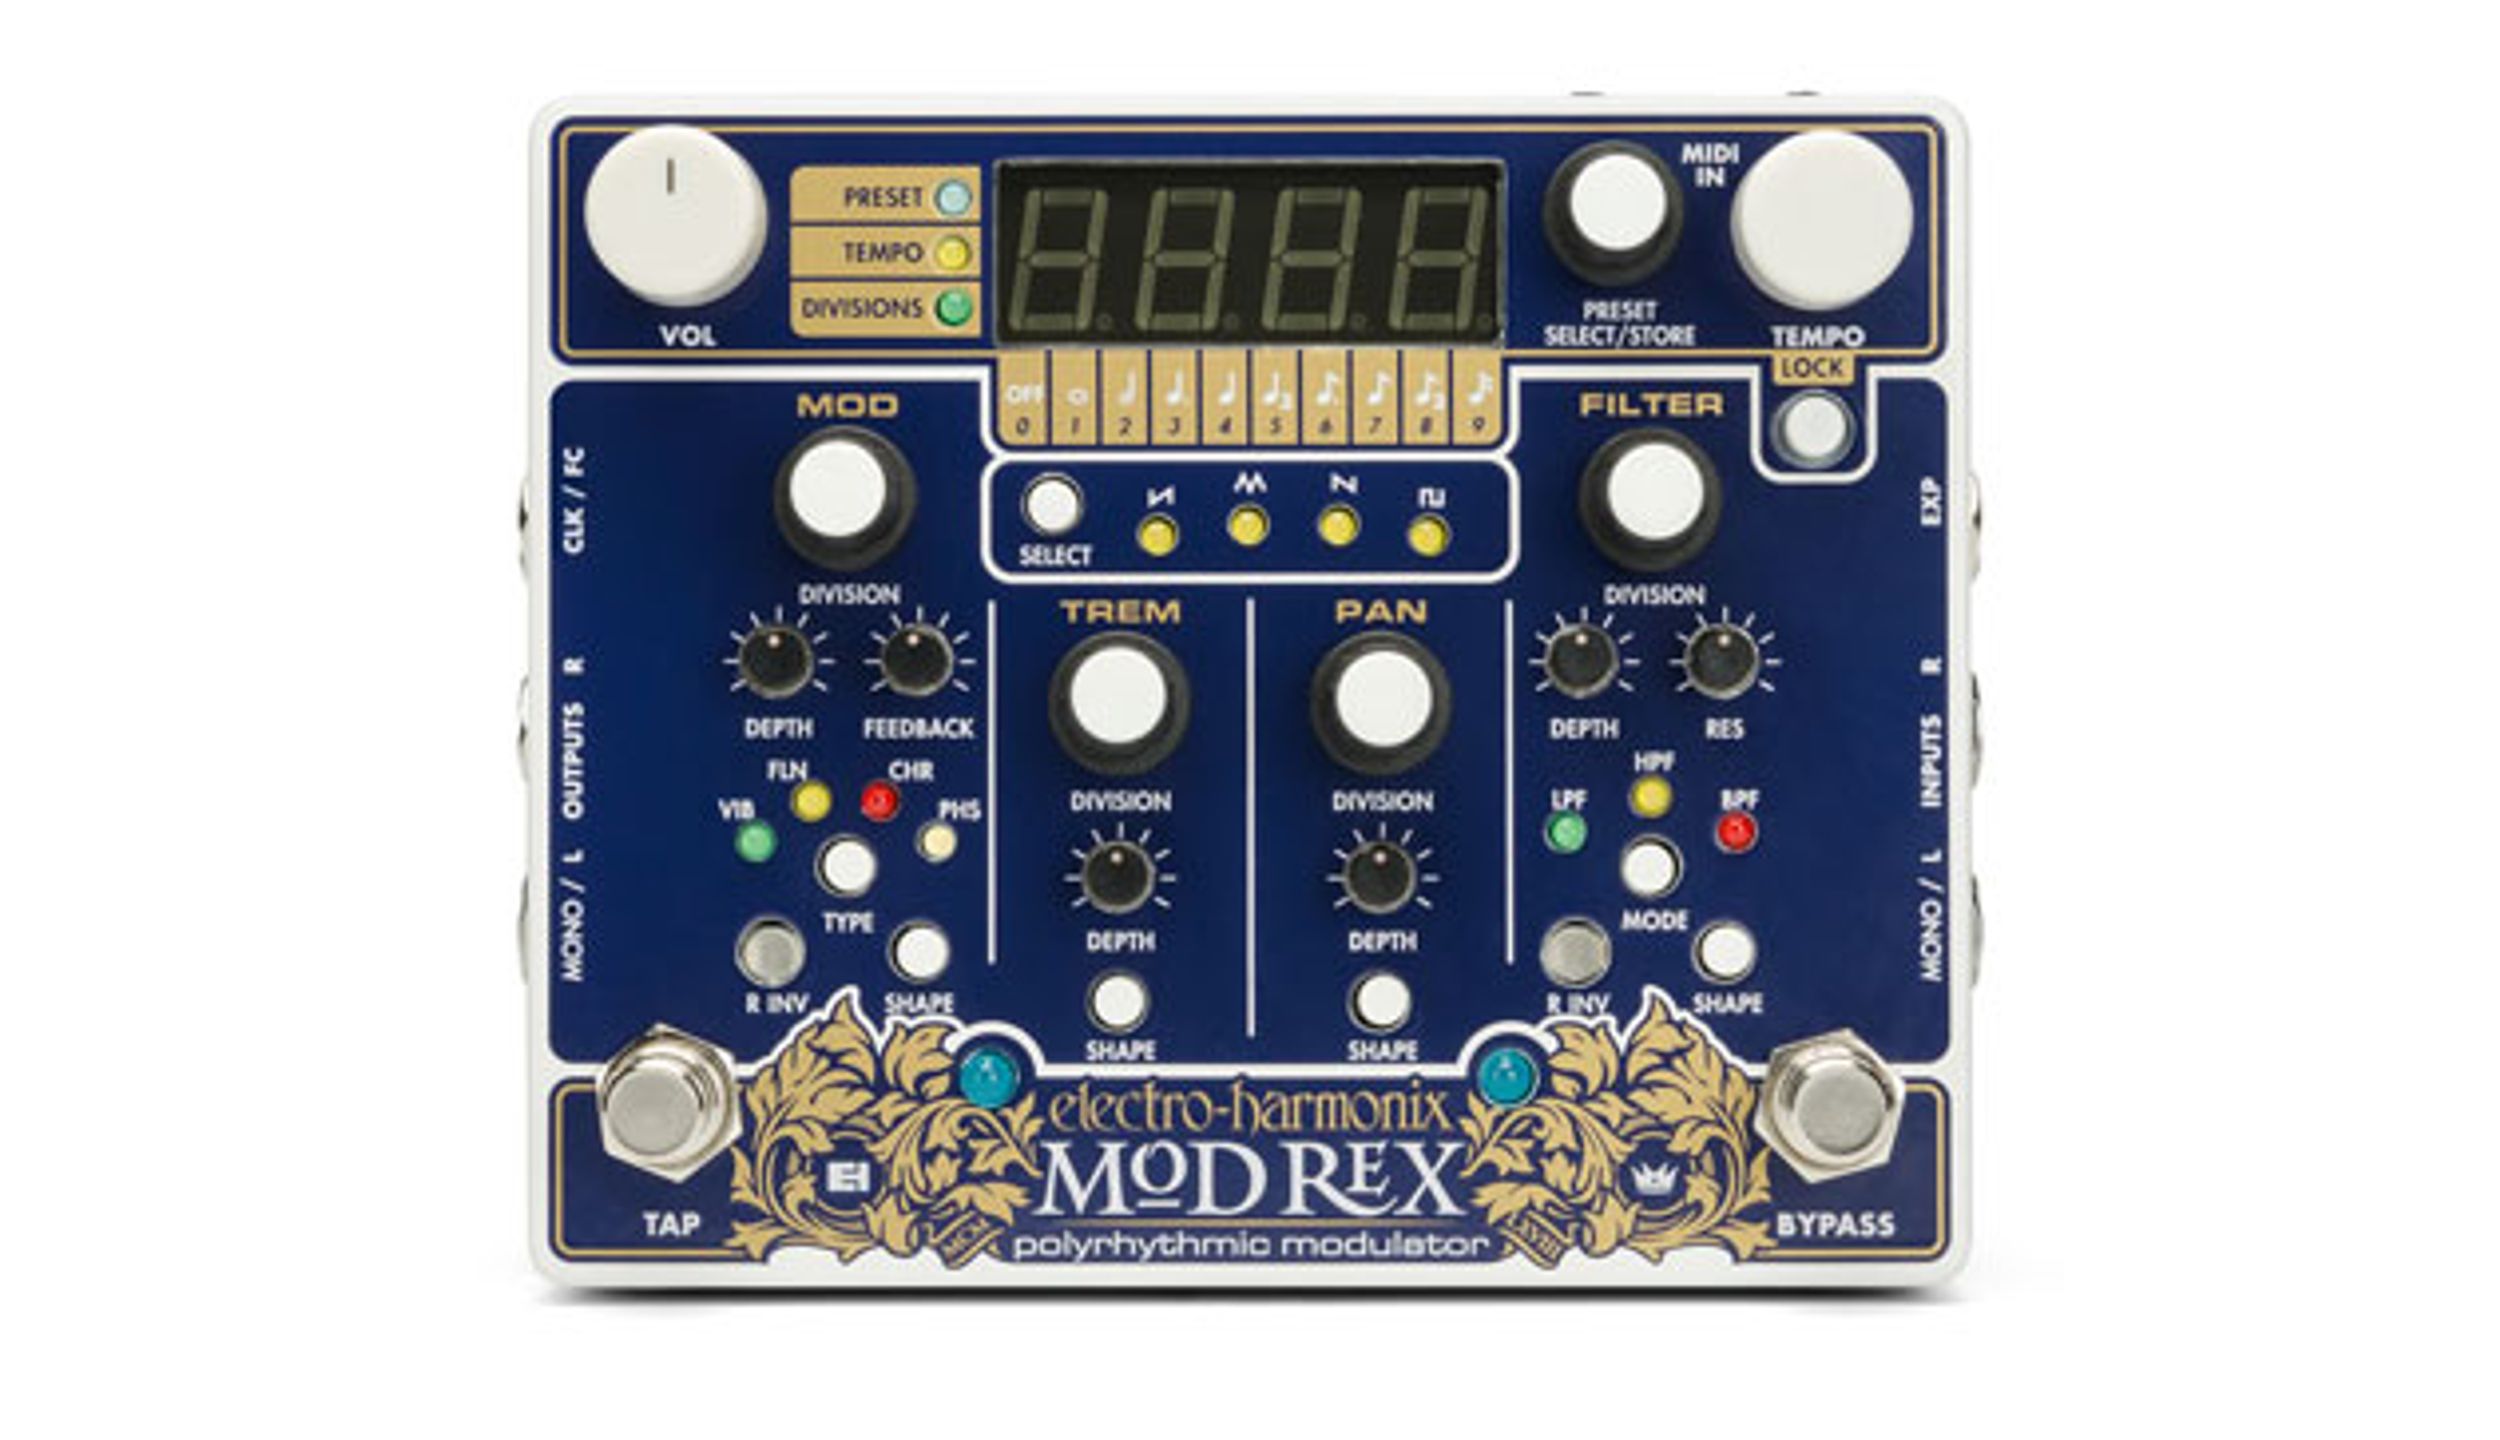 Electro-Harmonix Unveils the Mod Rex Polyrhythmic Modulator Pedal